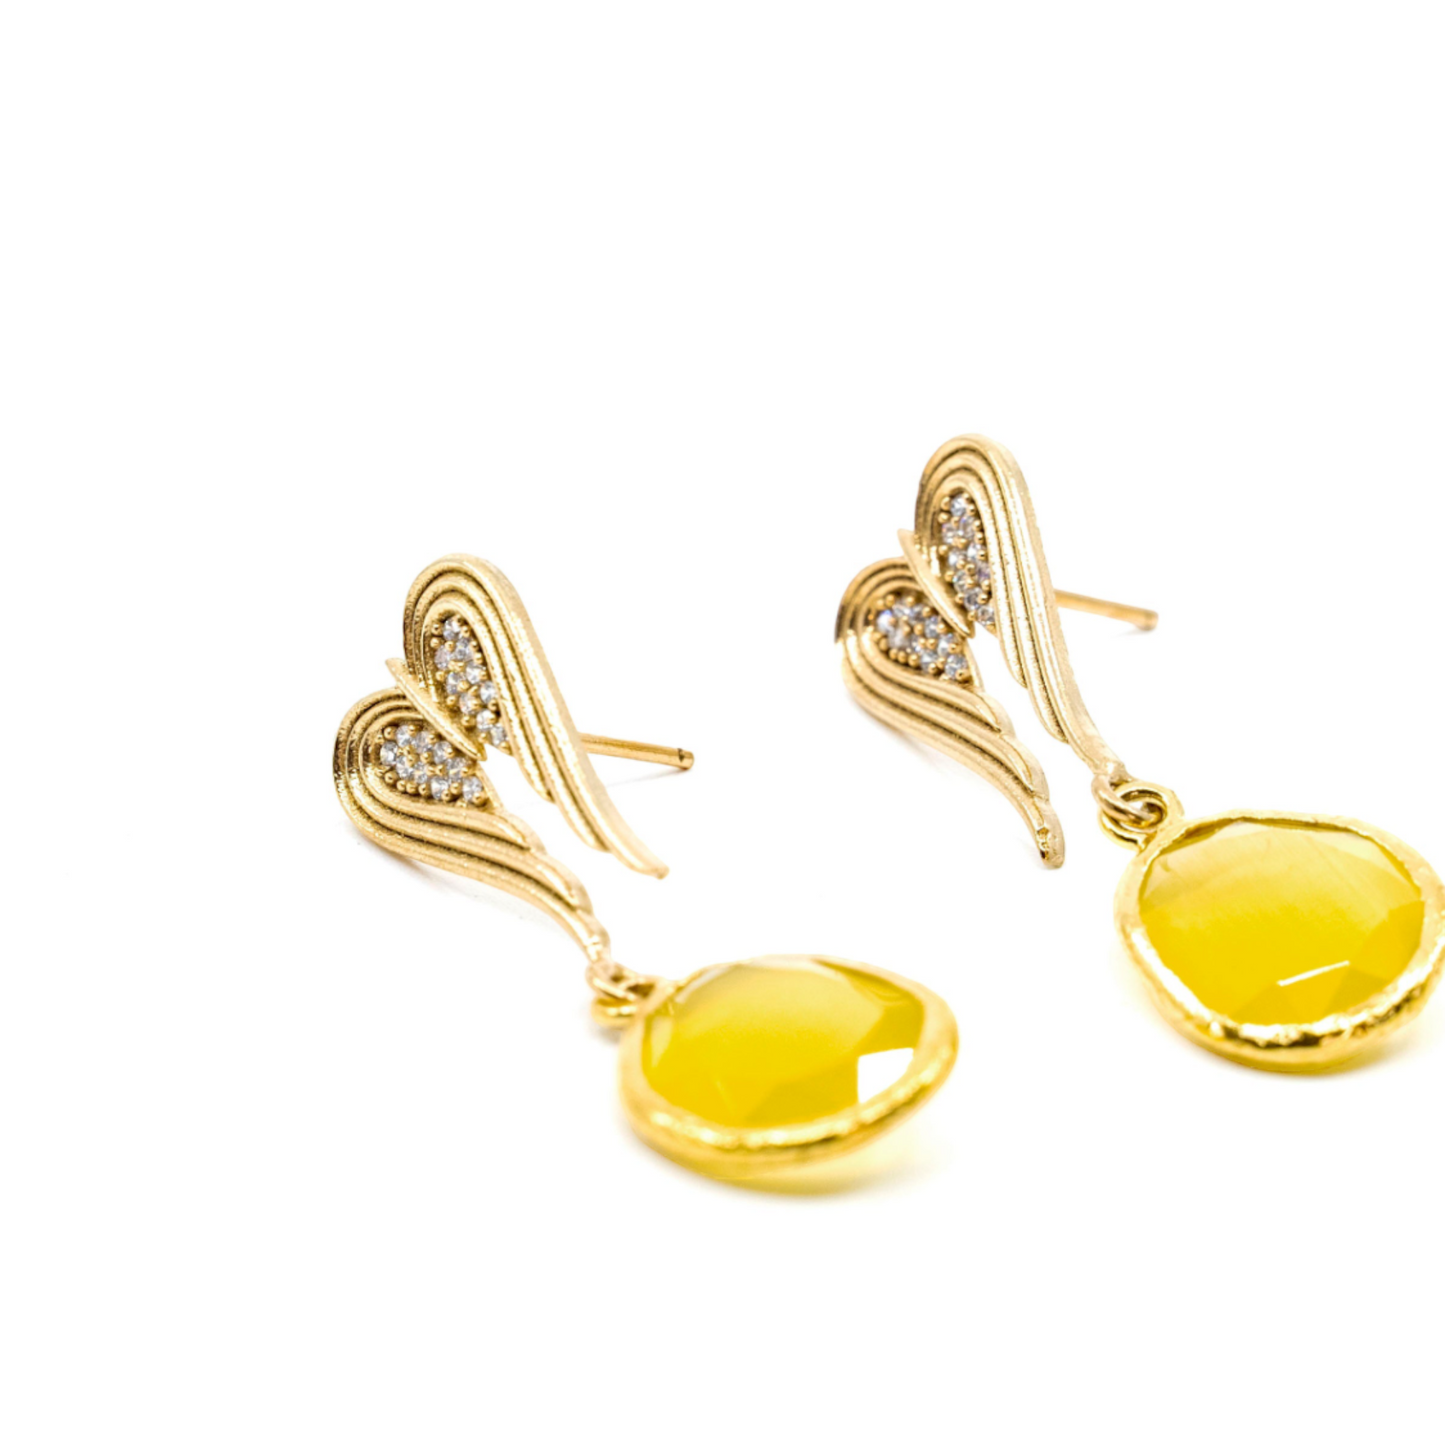 Dangling Heart Earring with Yellow Oval Stone - shopzeyzey